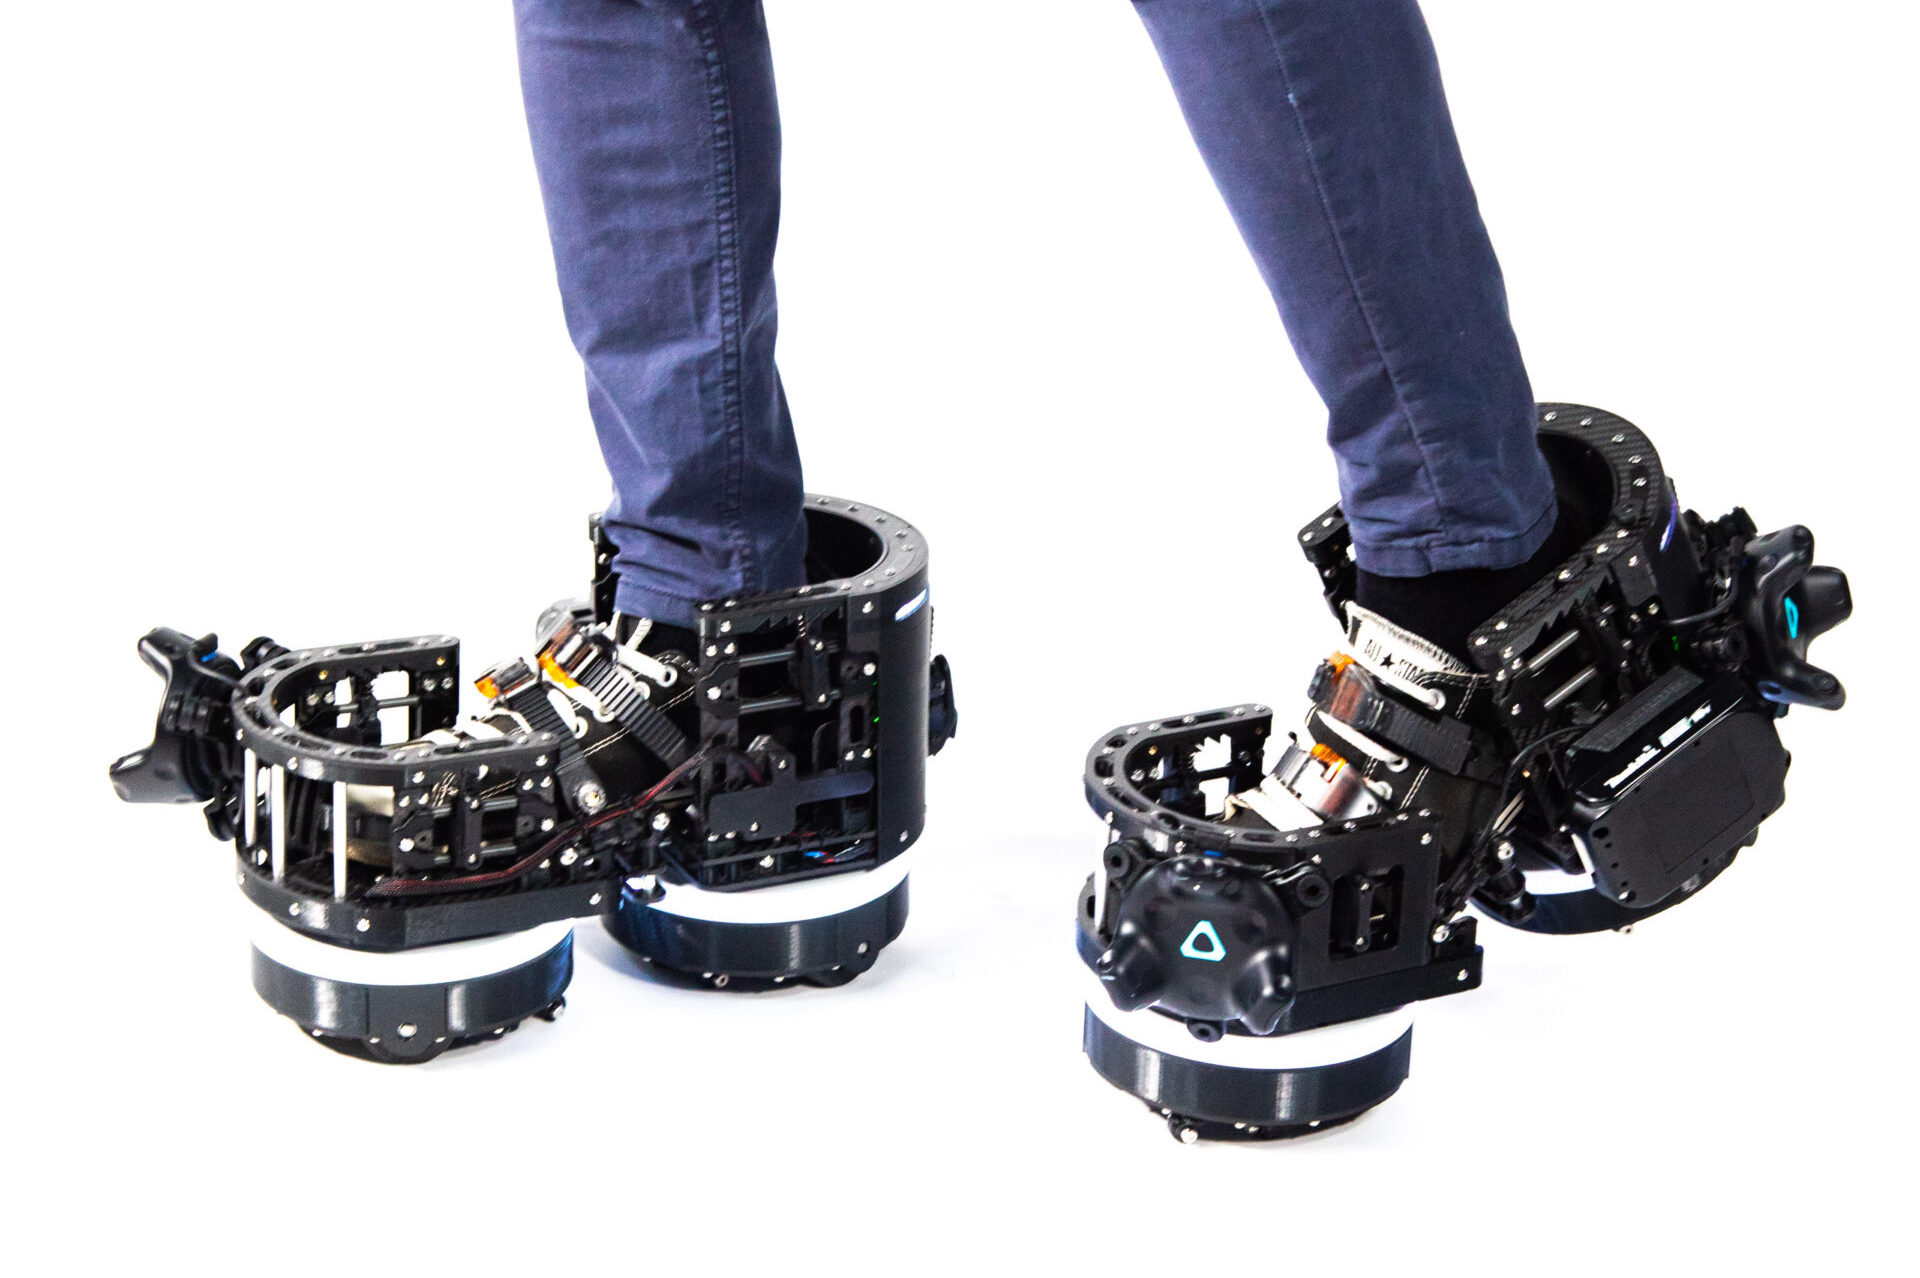 Ekto-VR-Robotics-Boots-09-2-1920x2027